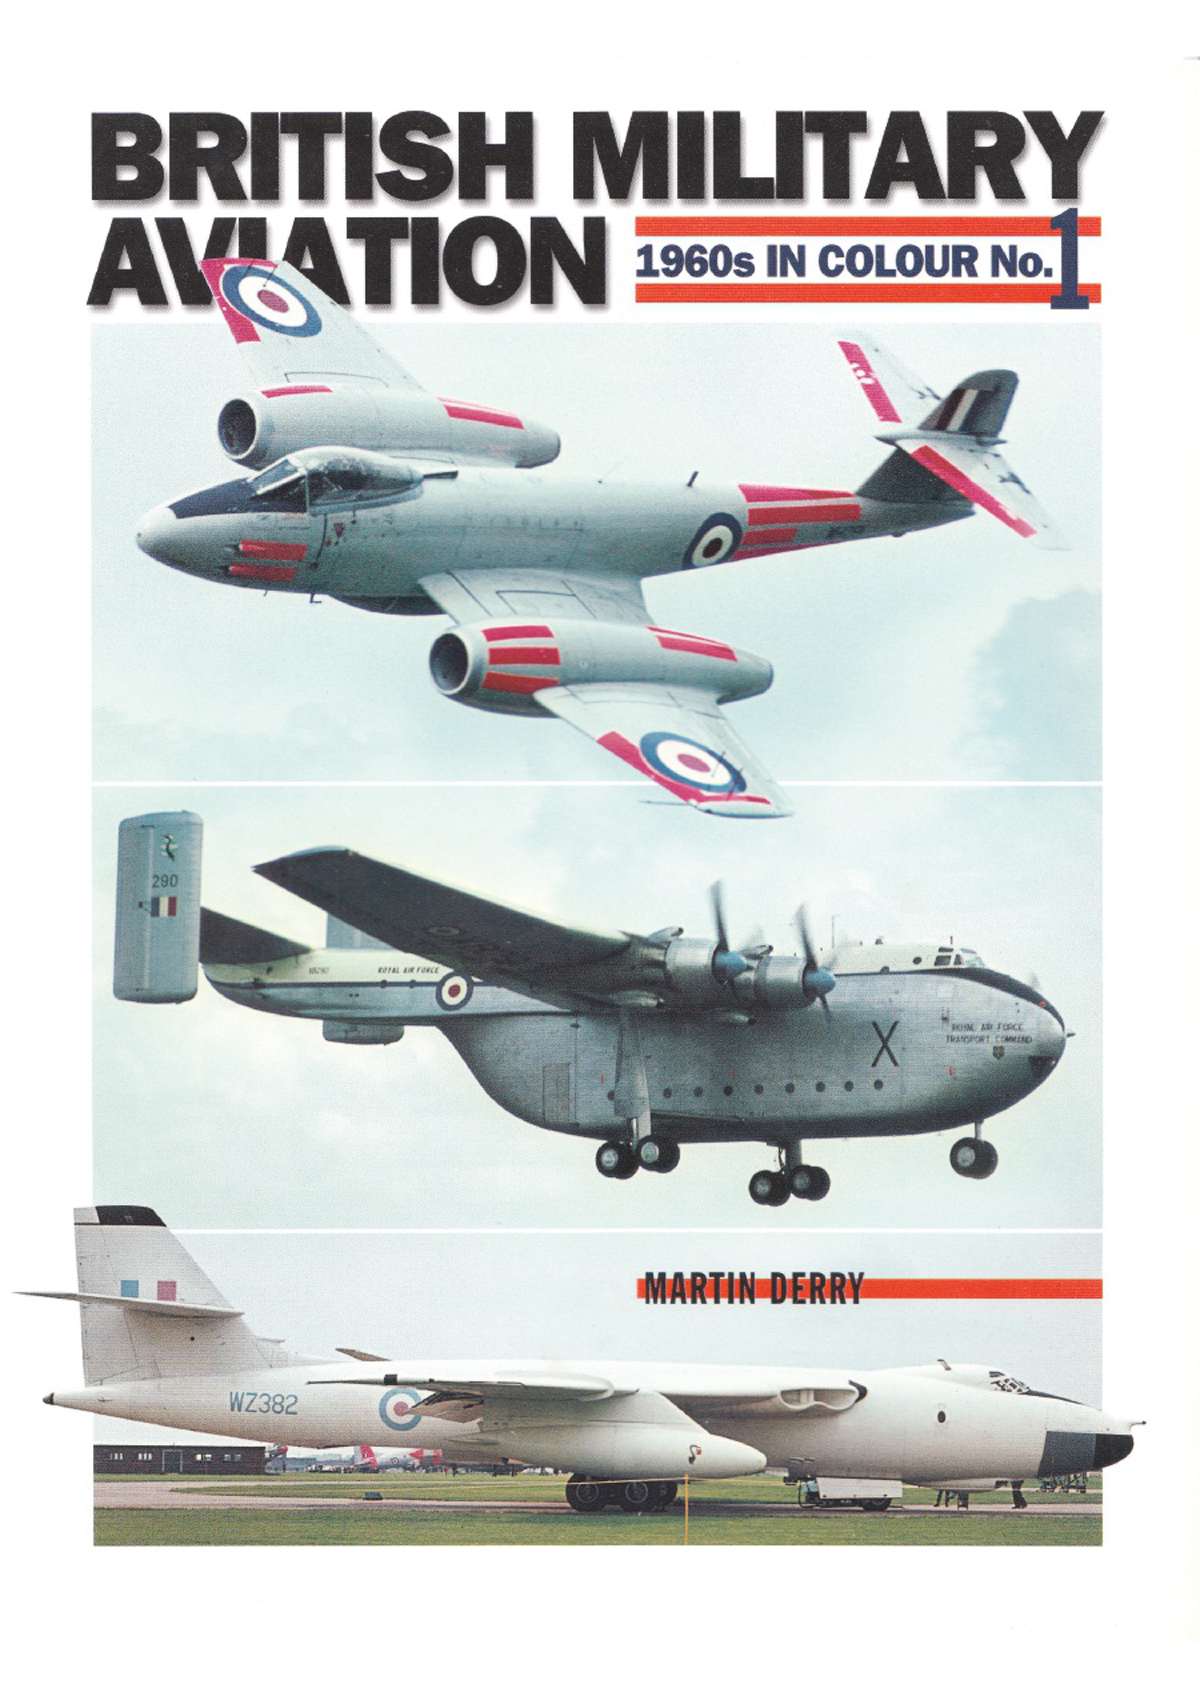 British Military Aviation 1960s in Colour